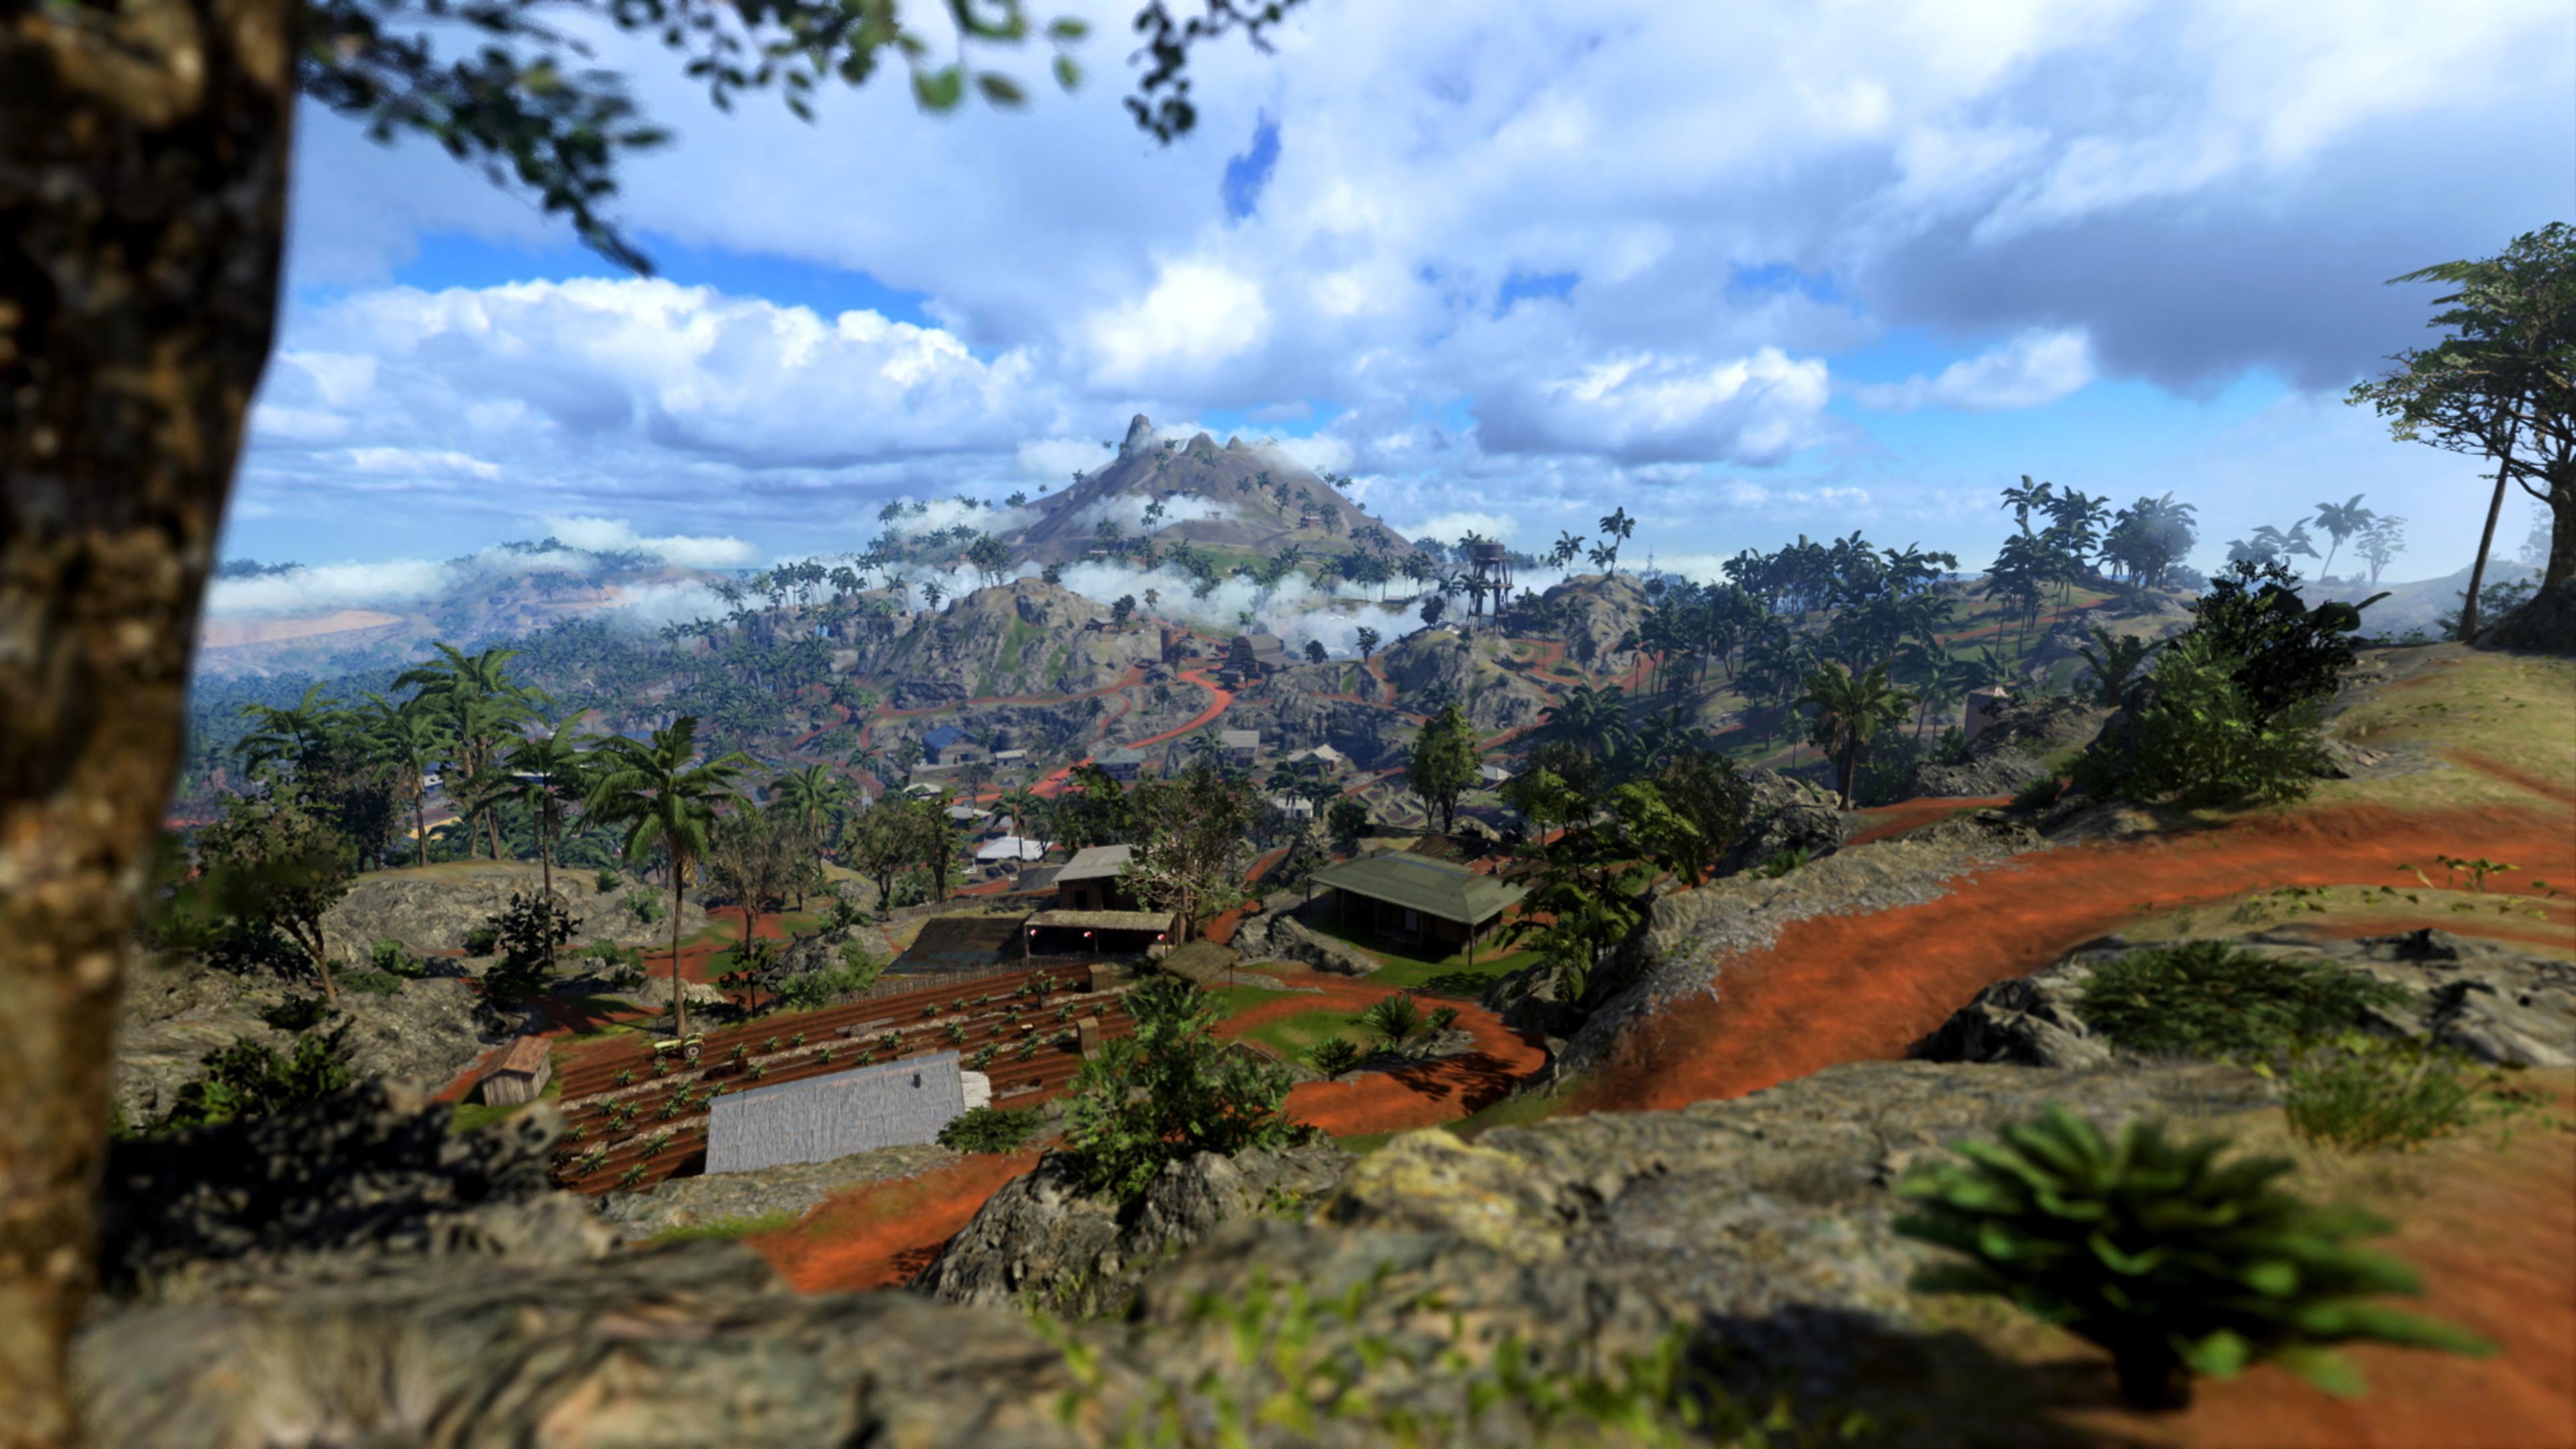 Captura de pantalla de Call of Duty Vanguard mostrando un paisaje del nuevo mapa de Warzone, Caldera.